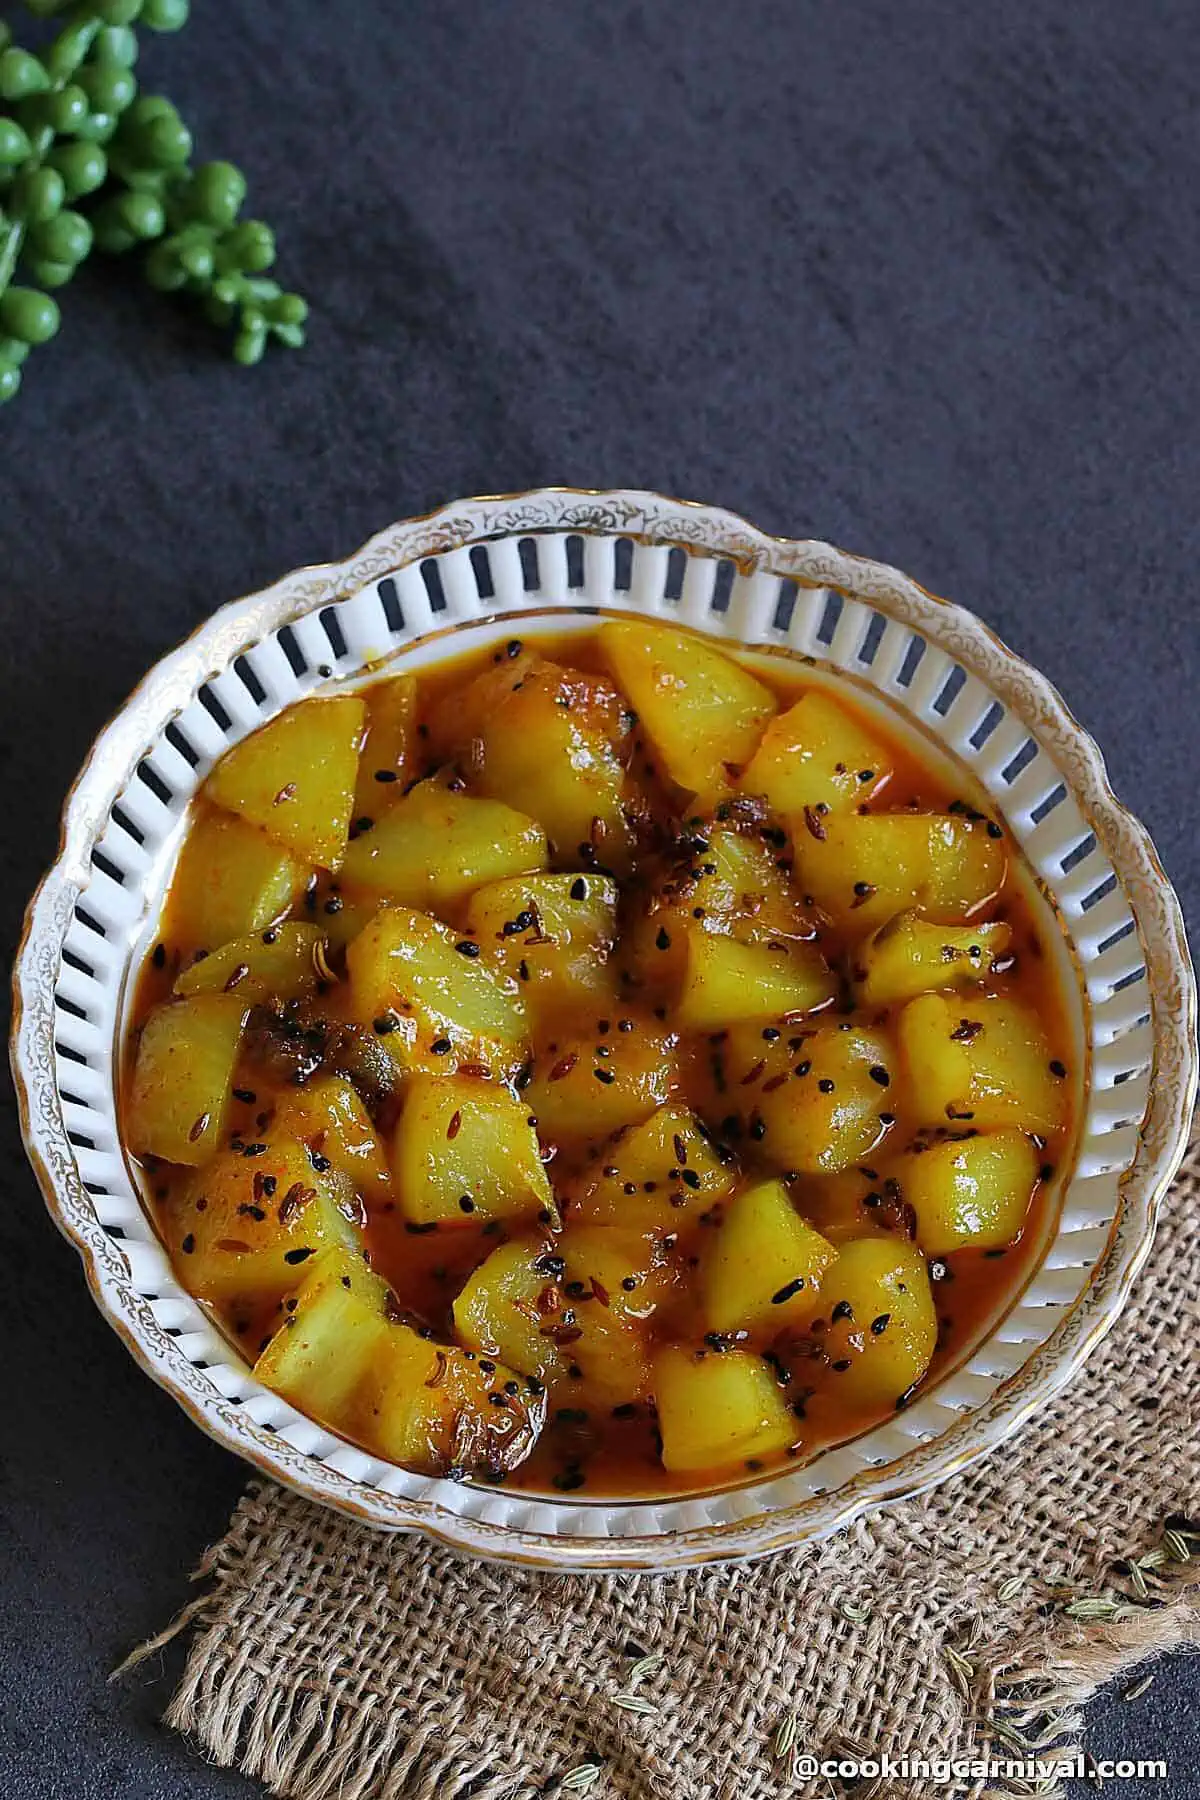 aam ki launji (Mango chutney) in a bowl.